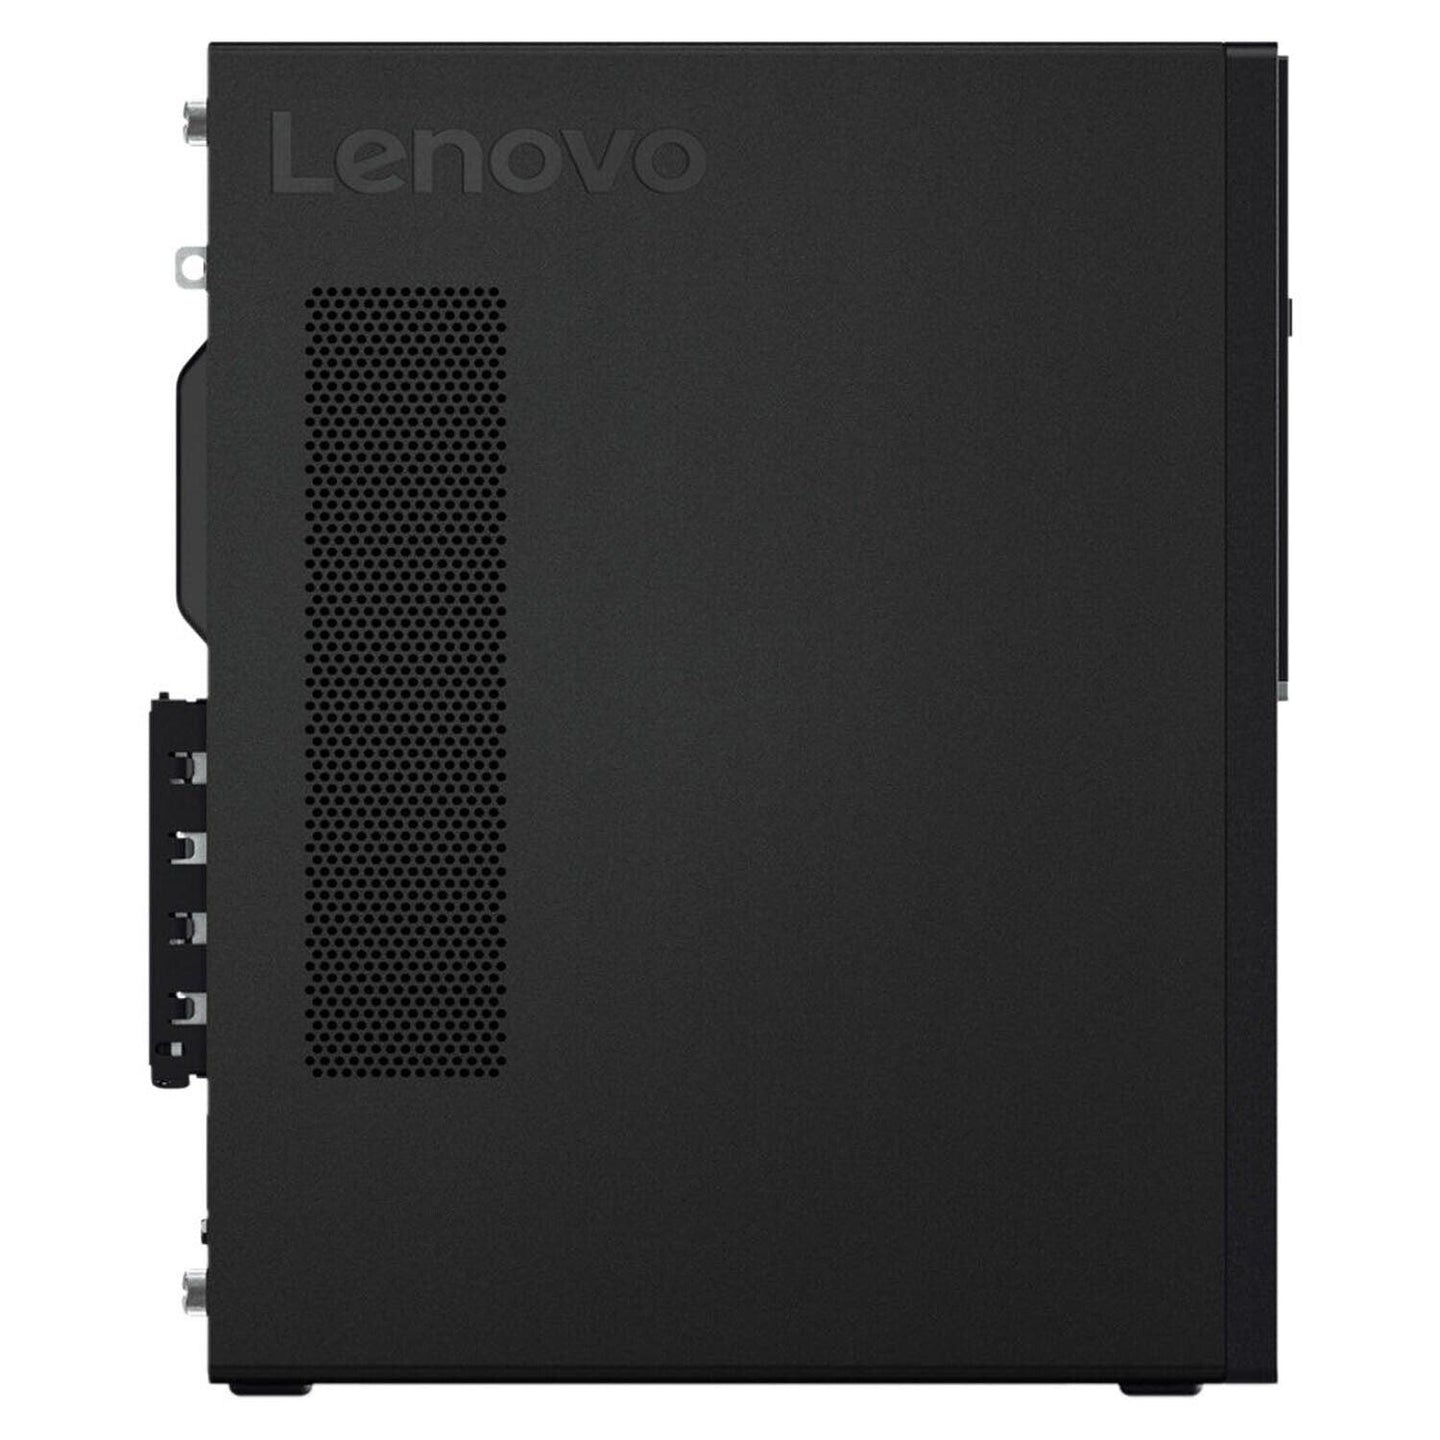 Lenovo V520S-08IKL Desktop PC Intel Core i3-7100 8GB DDR4 250GB HDD WIN 10 PRO